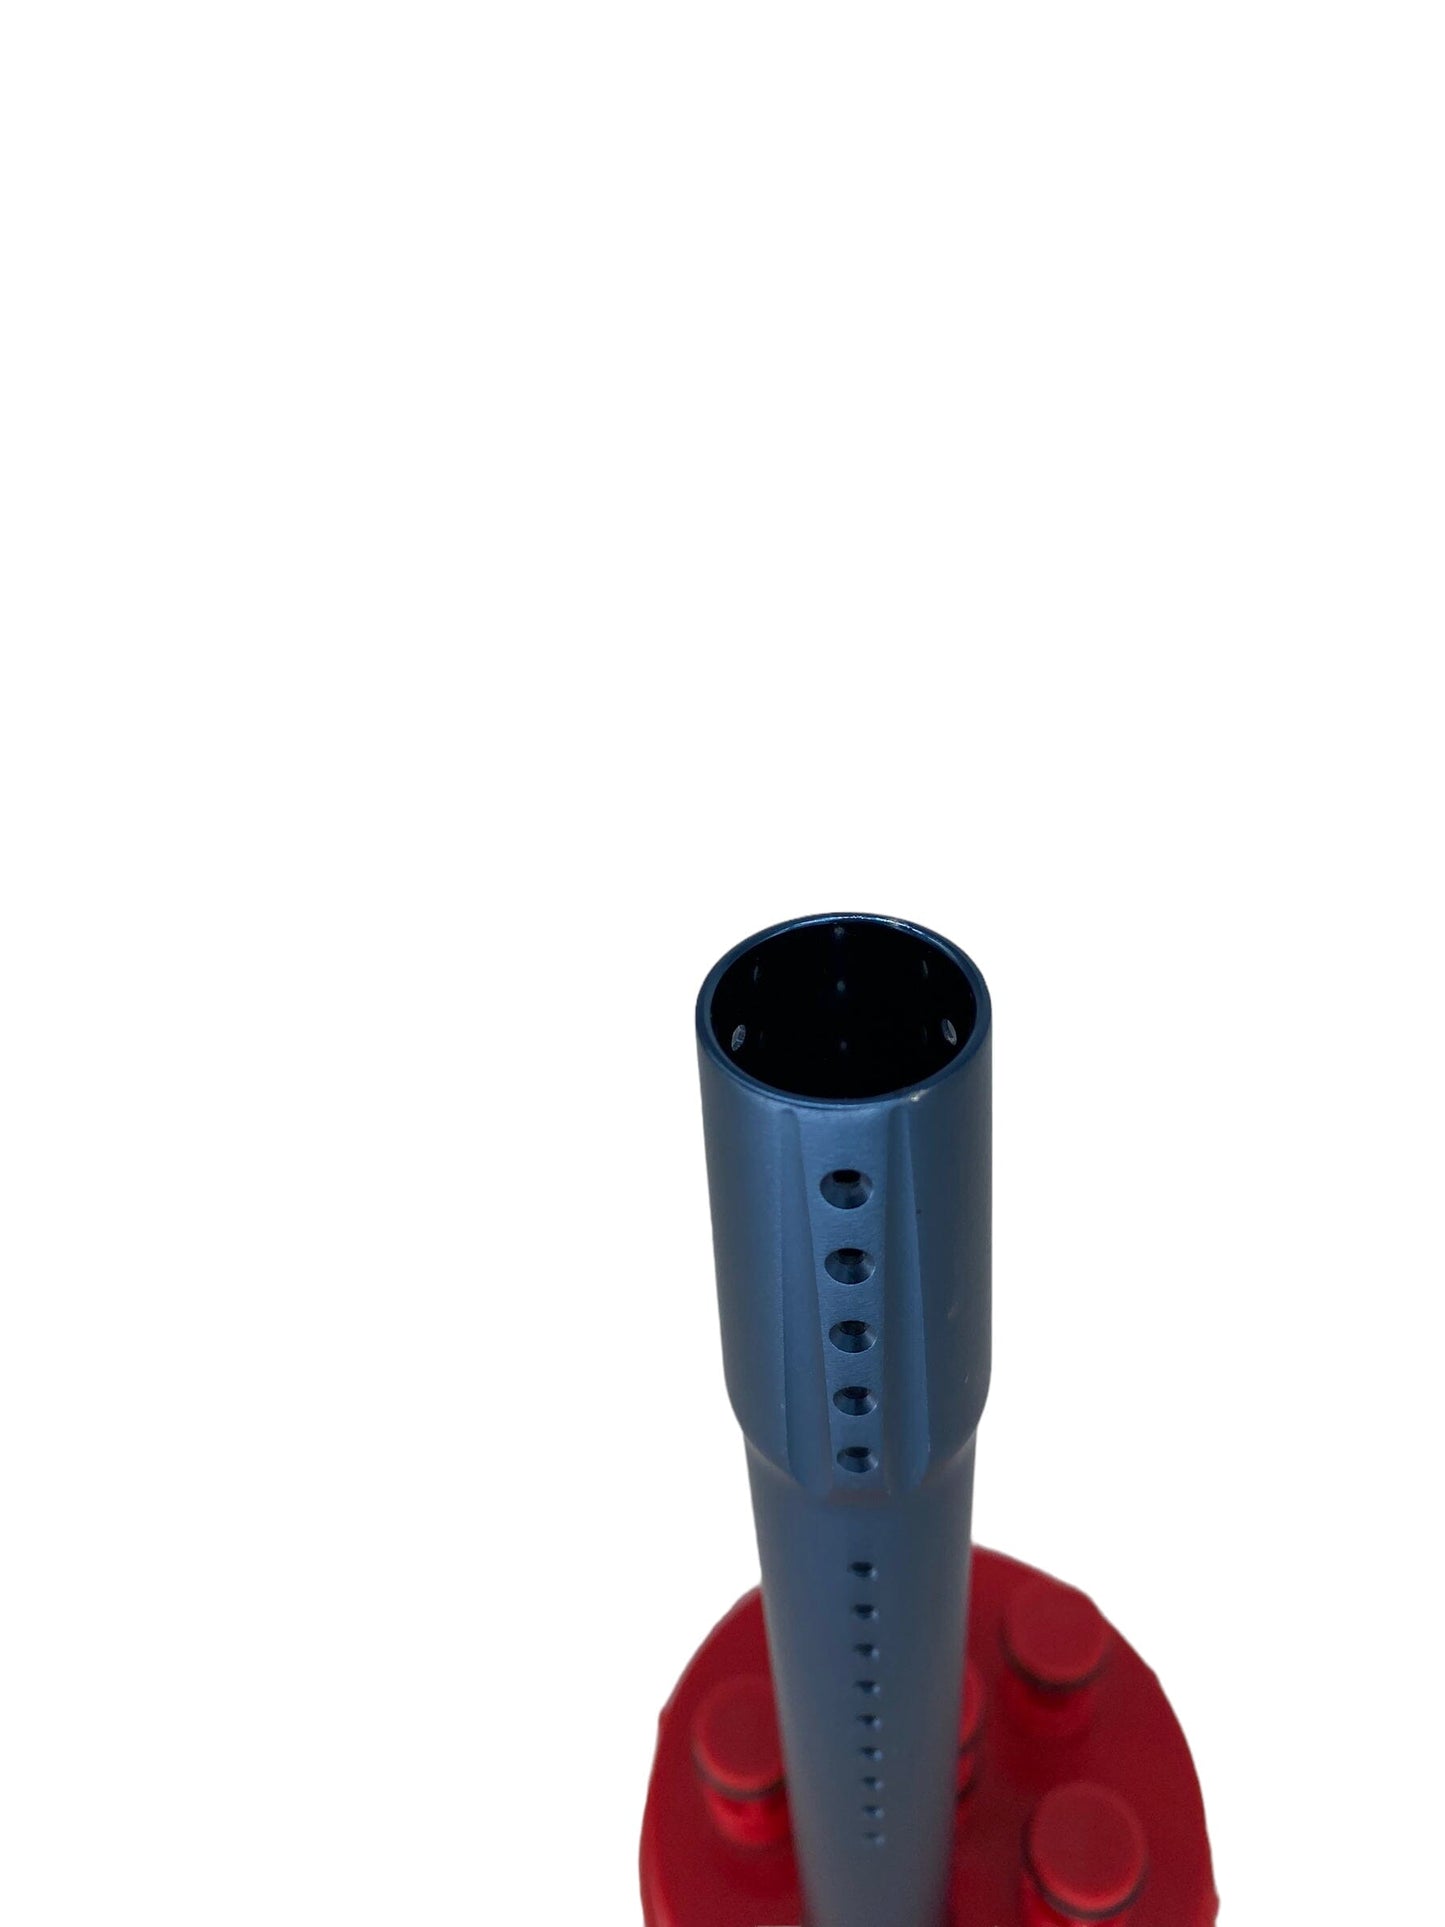 Used Dye Paintball Gun Barrel Tip Paintball Gun from CPXBrosPaintball Buy/Sell/Trade Paintball Markers, Paintball Hoppers, Paintball Masks, and Hormesis Headbands